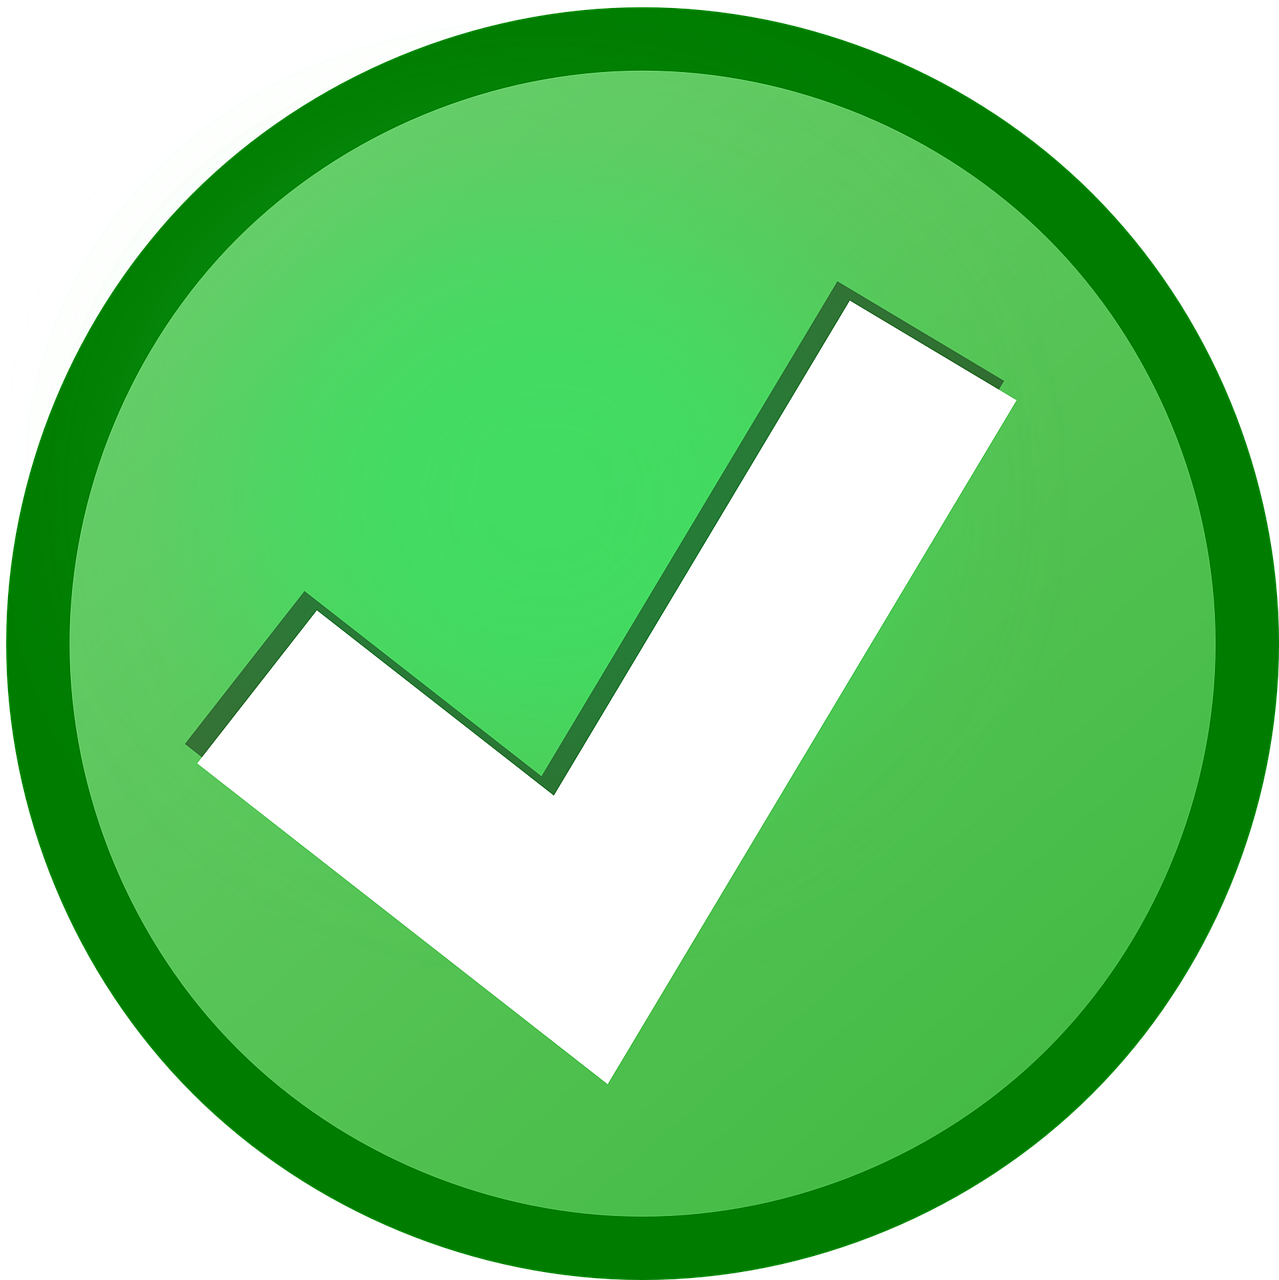 Green check mark